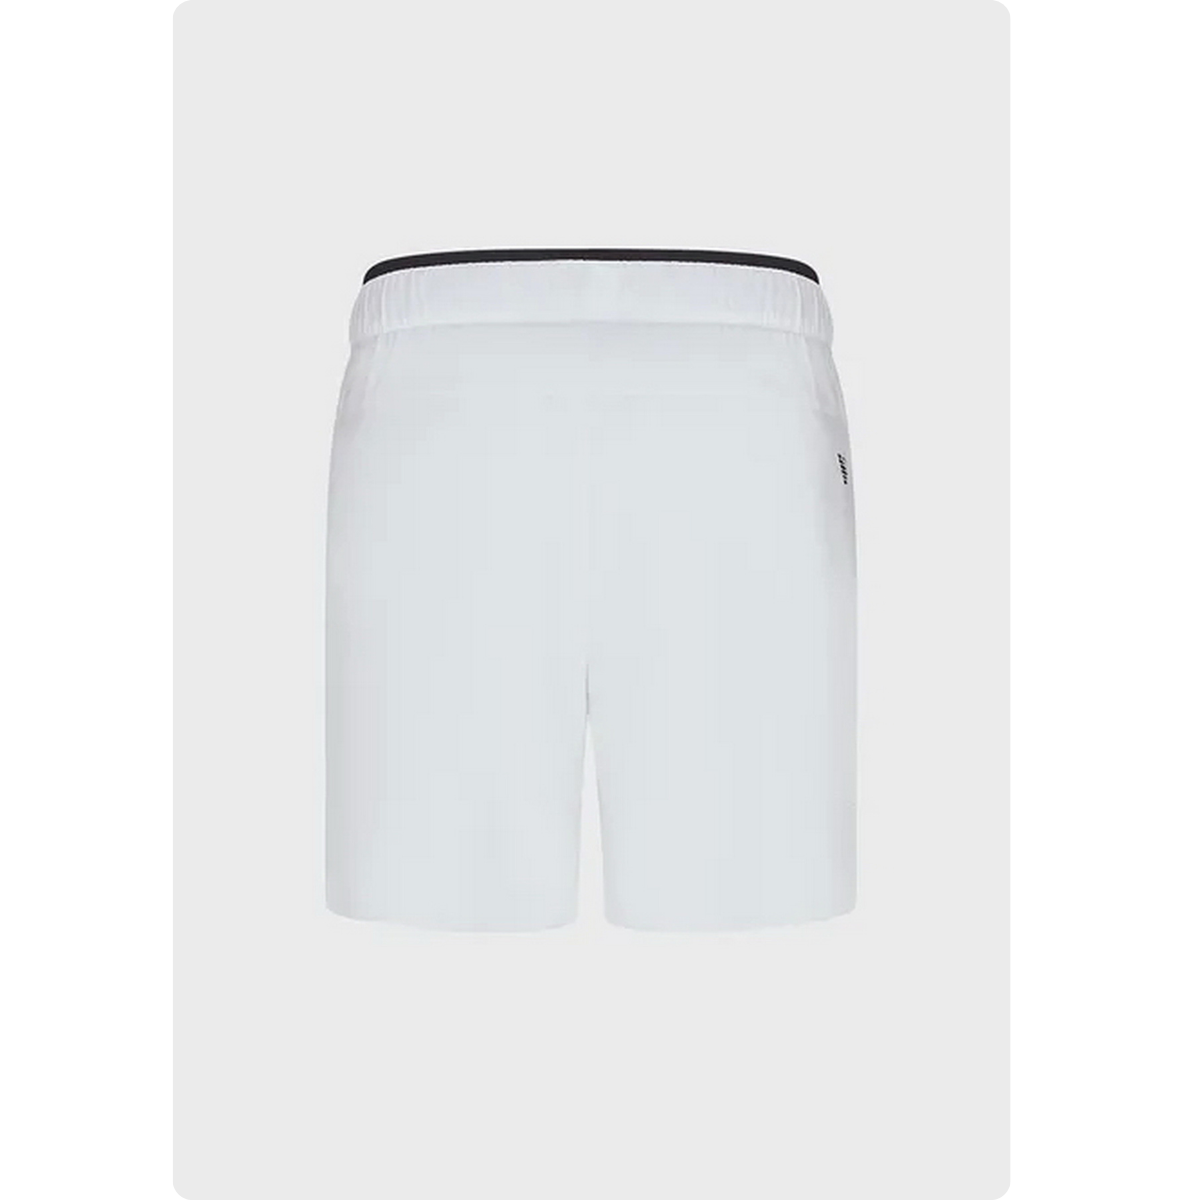 EA7 Giorgio Armani - Man Woven Shorts - Oxford Tan